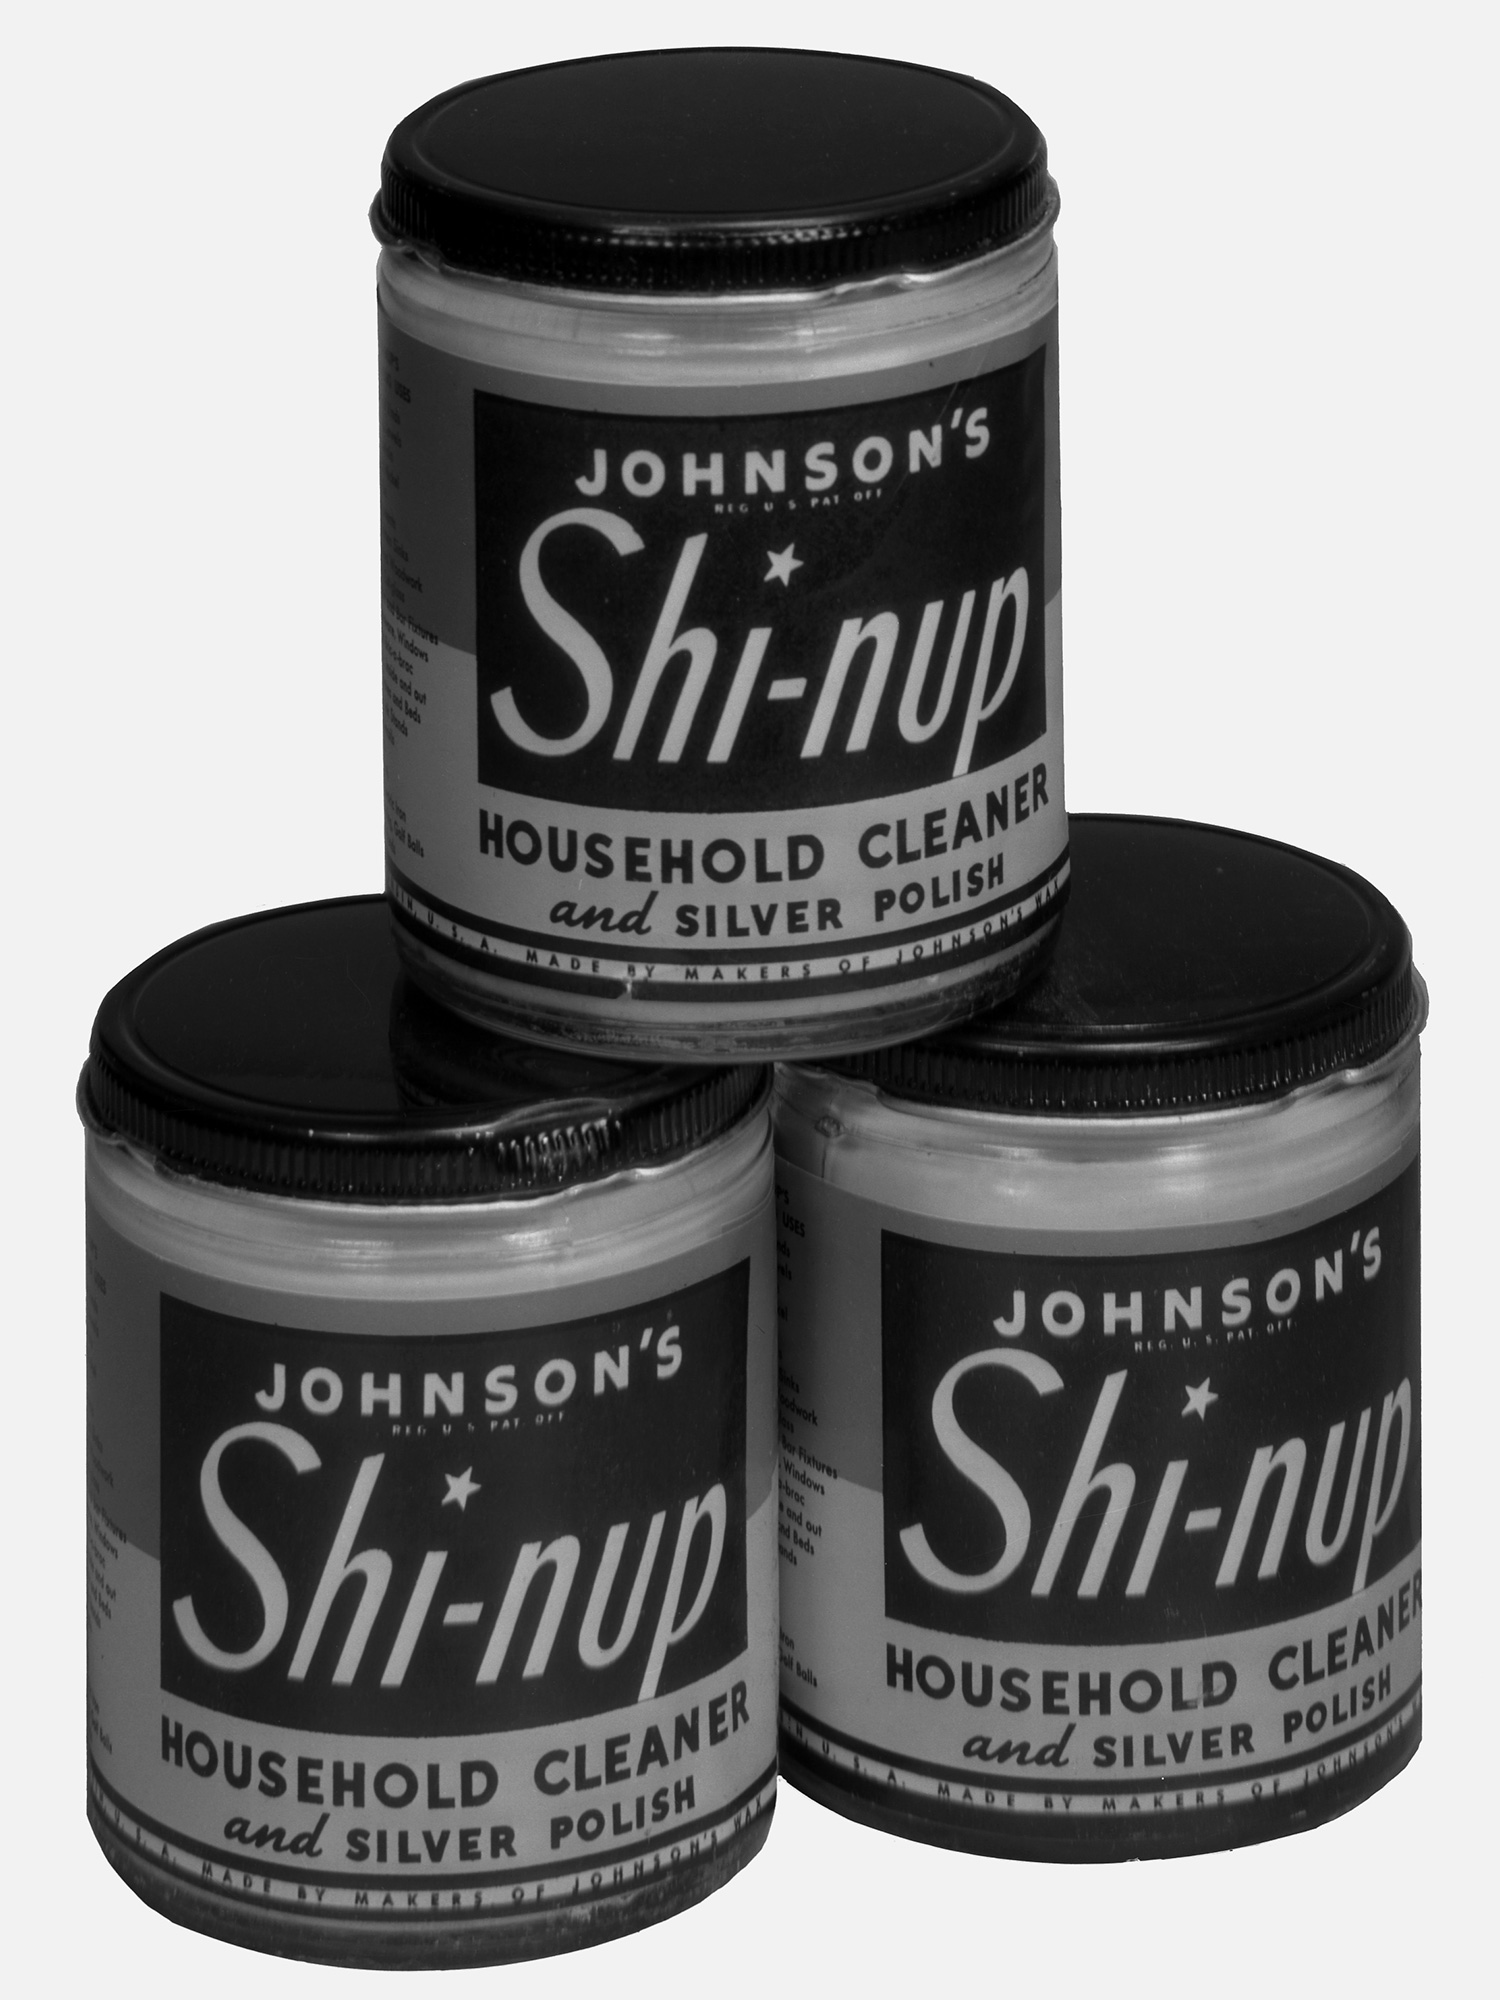 johnson wax products